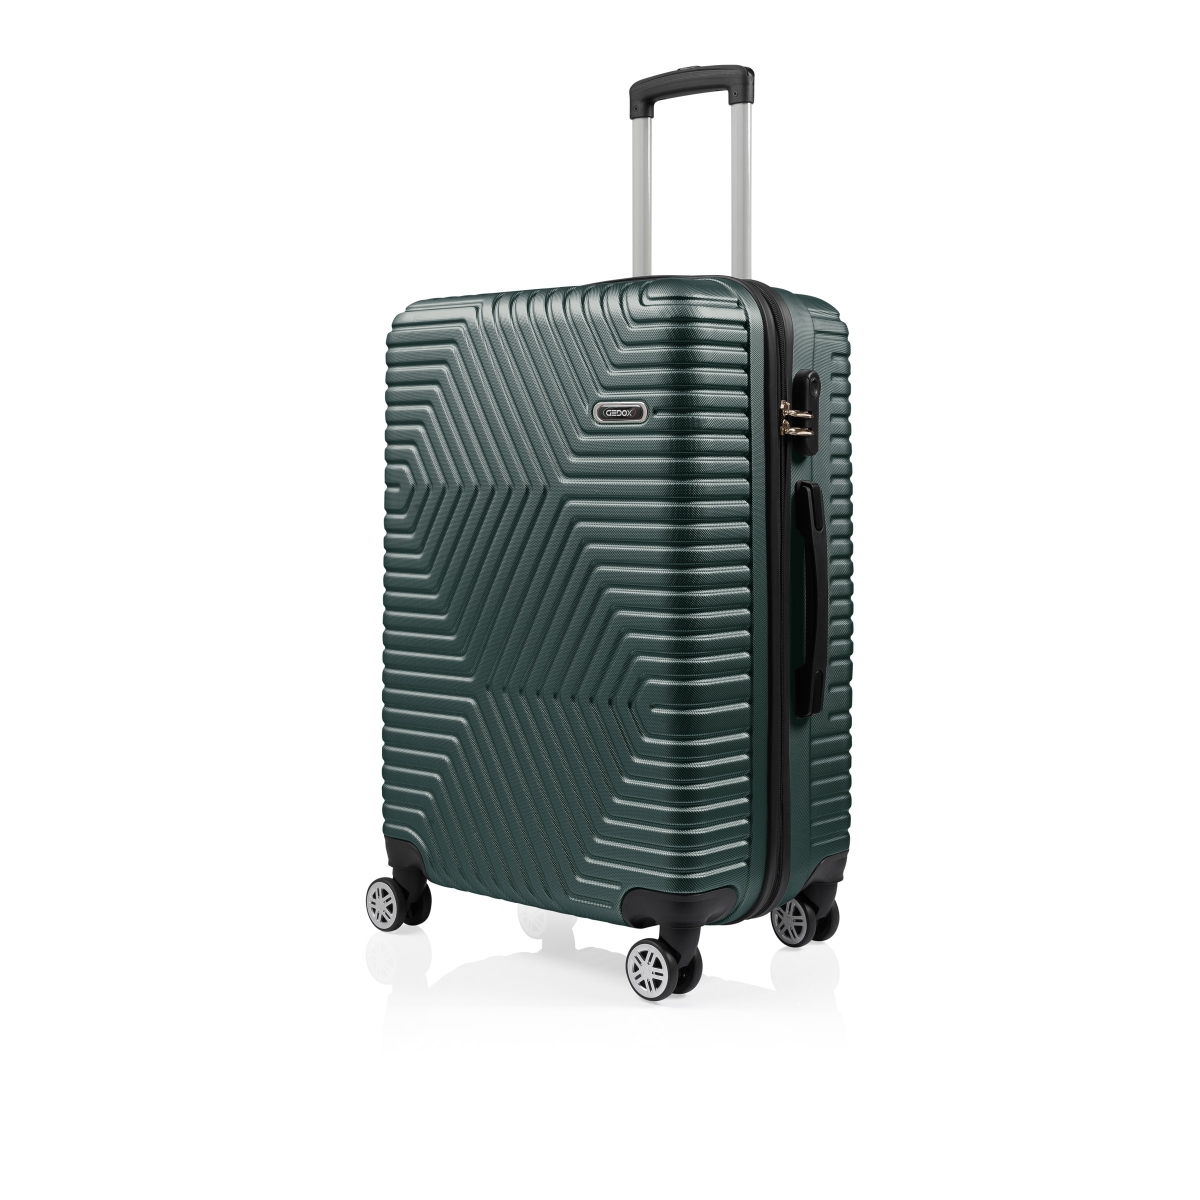 G&D Polo Suitcase ABS 3'lü Lüx Valiz Seyahat Seti - Model:600.07 Haki Yeşil